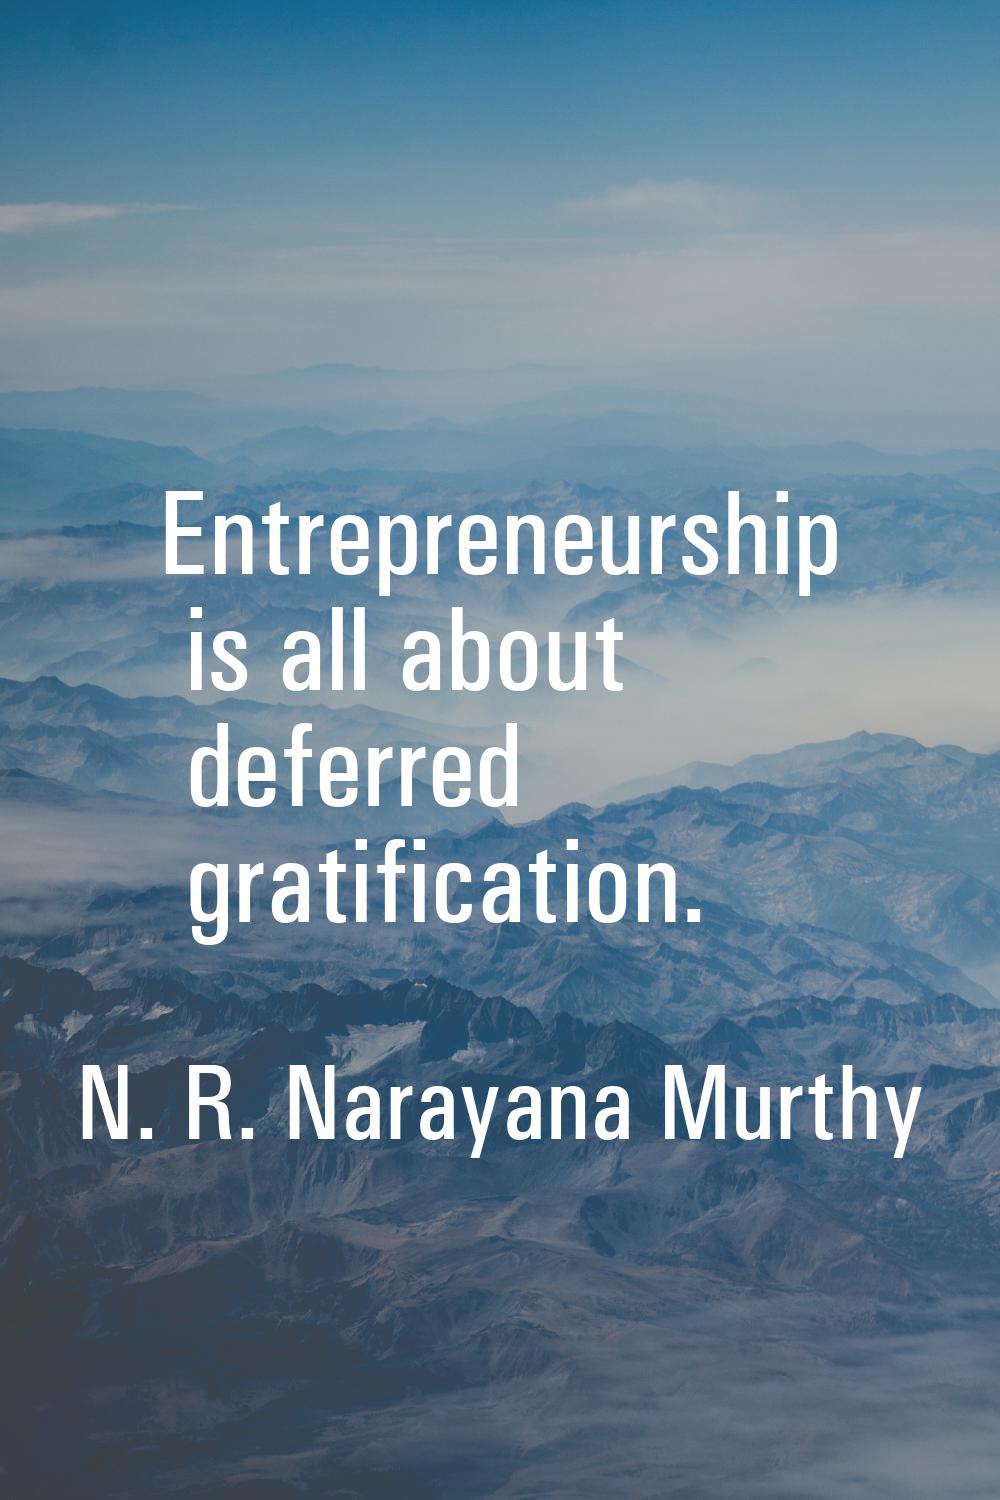 Entrepreneurship is all about deferred gratification.